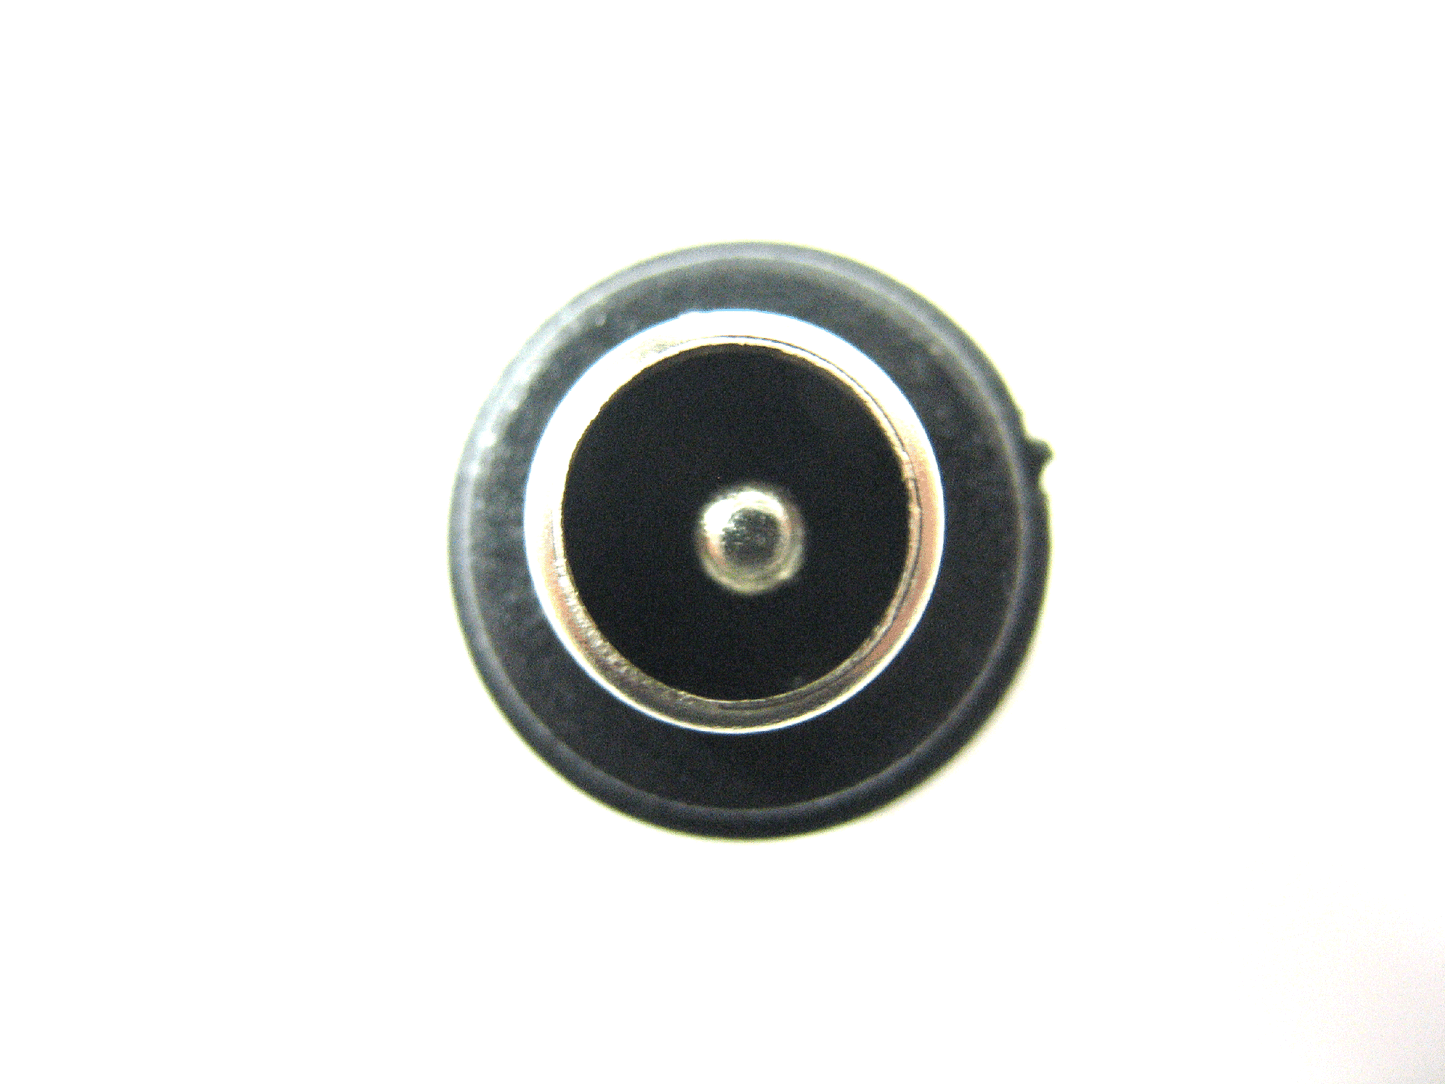 2.1mm x 5.5mm to 3.5mm Male Audio DC Power Plug Adaptor